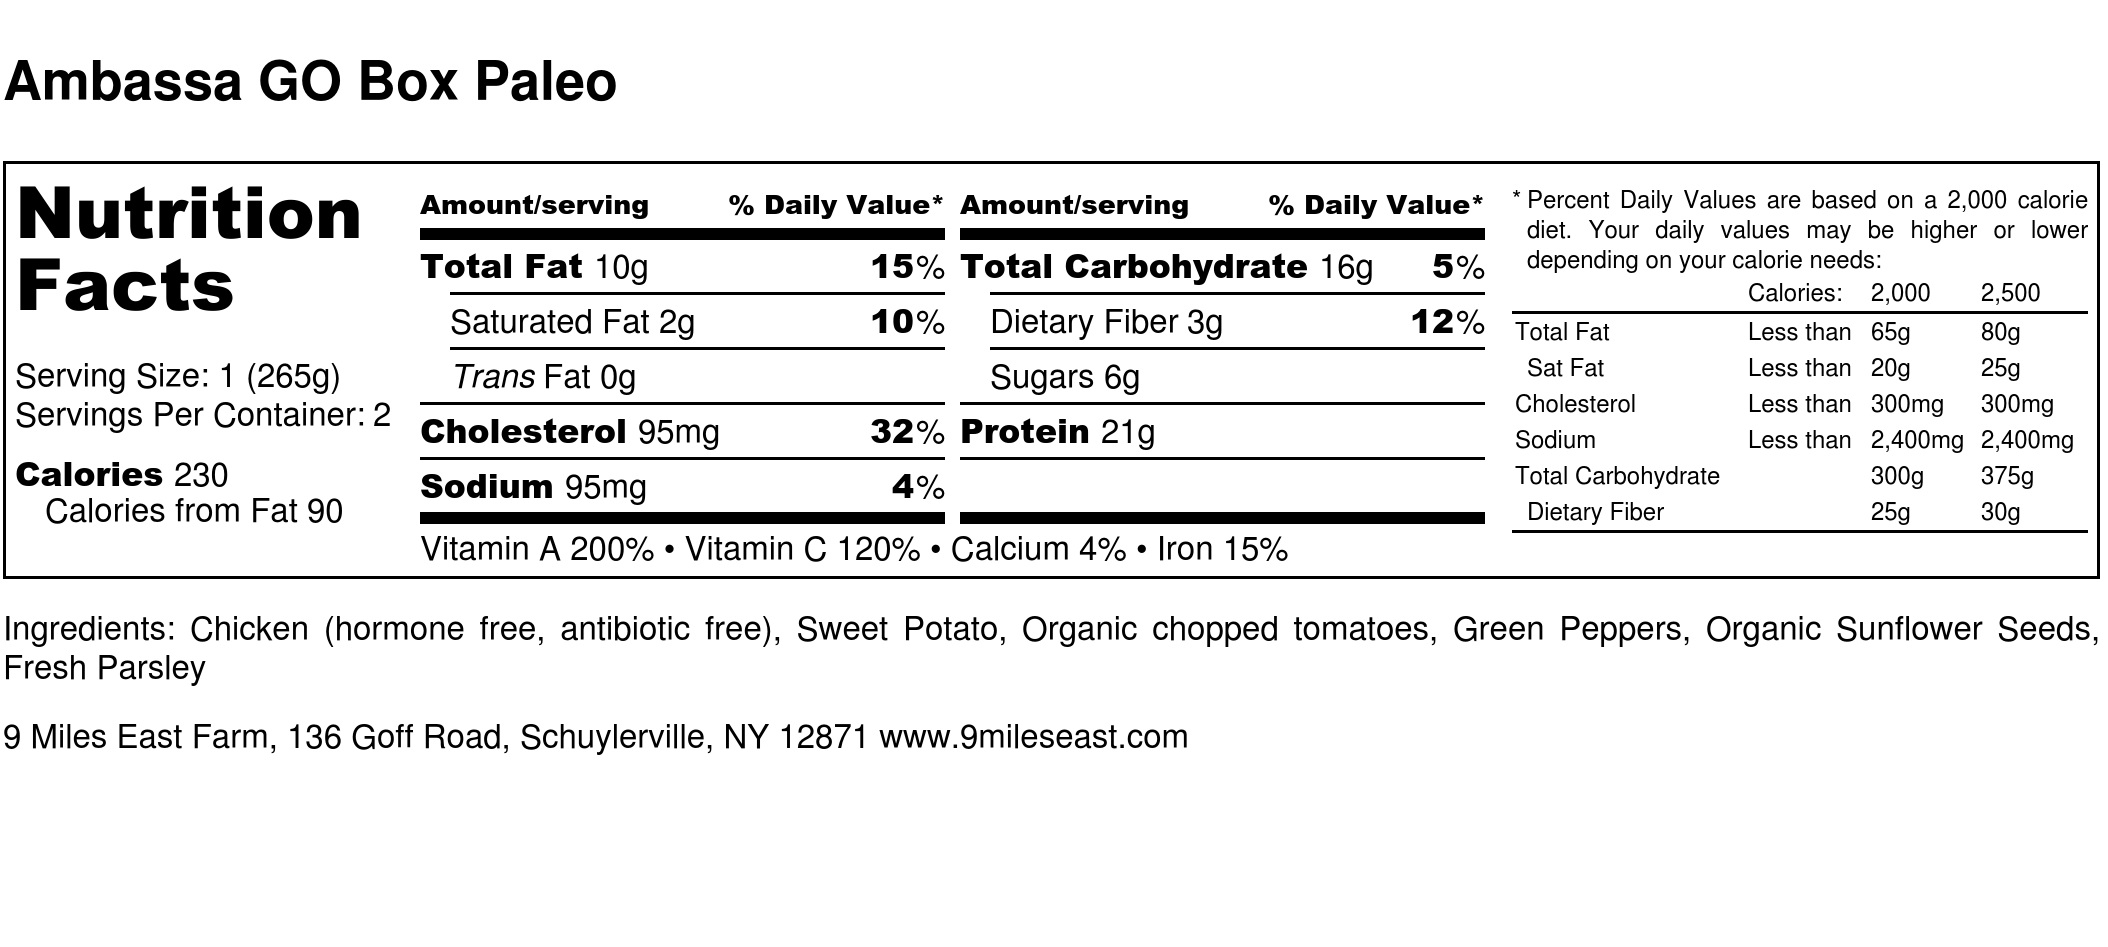 Ambassa GO Box Paleo - Nutrition Label.jpg